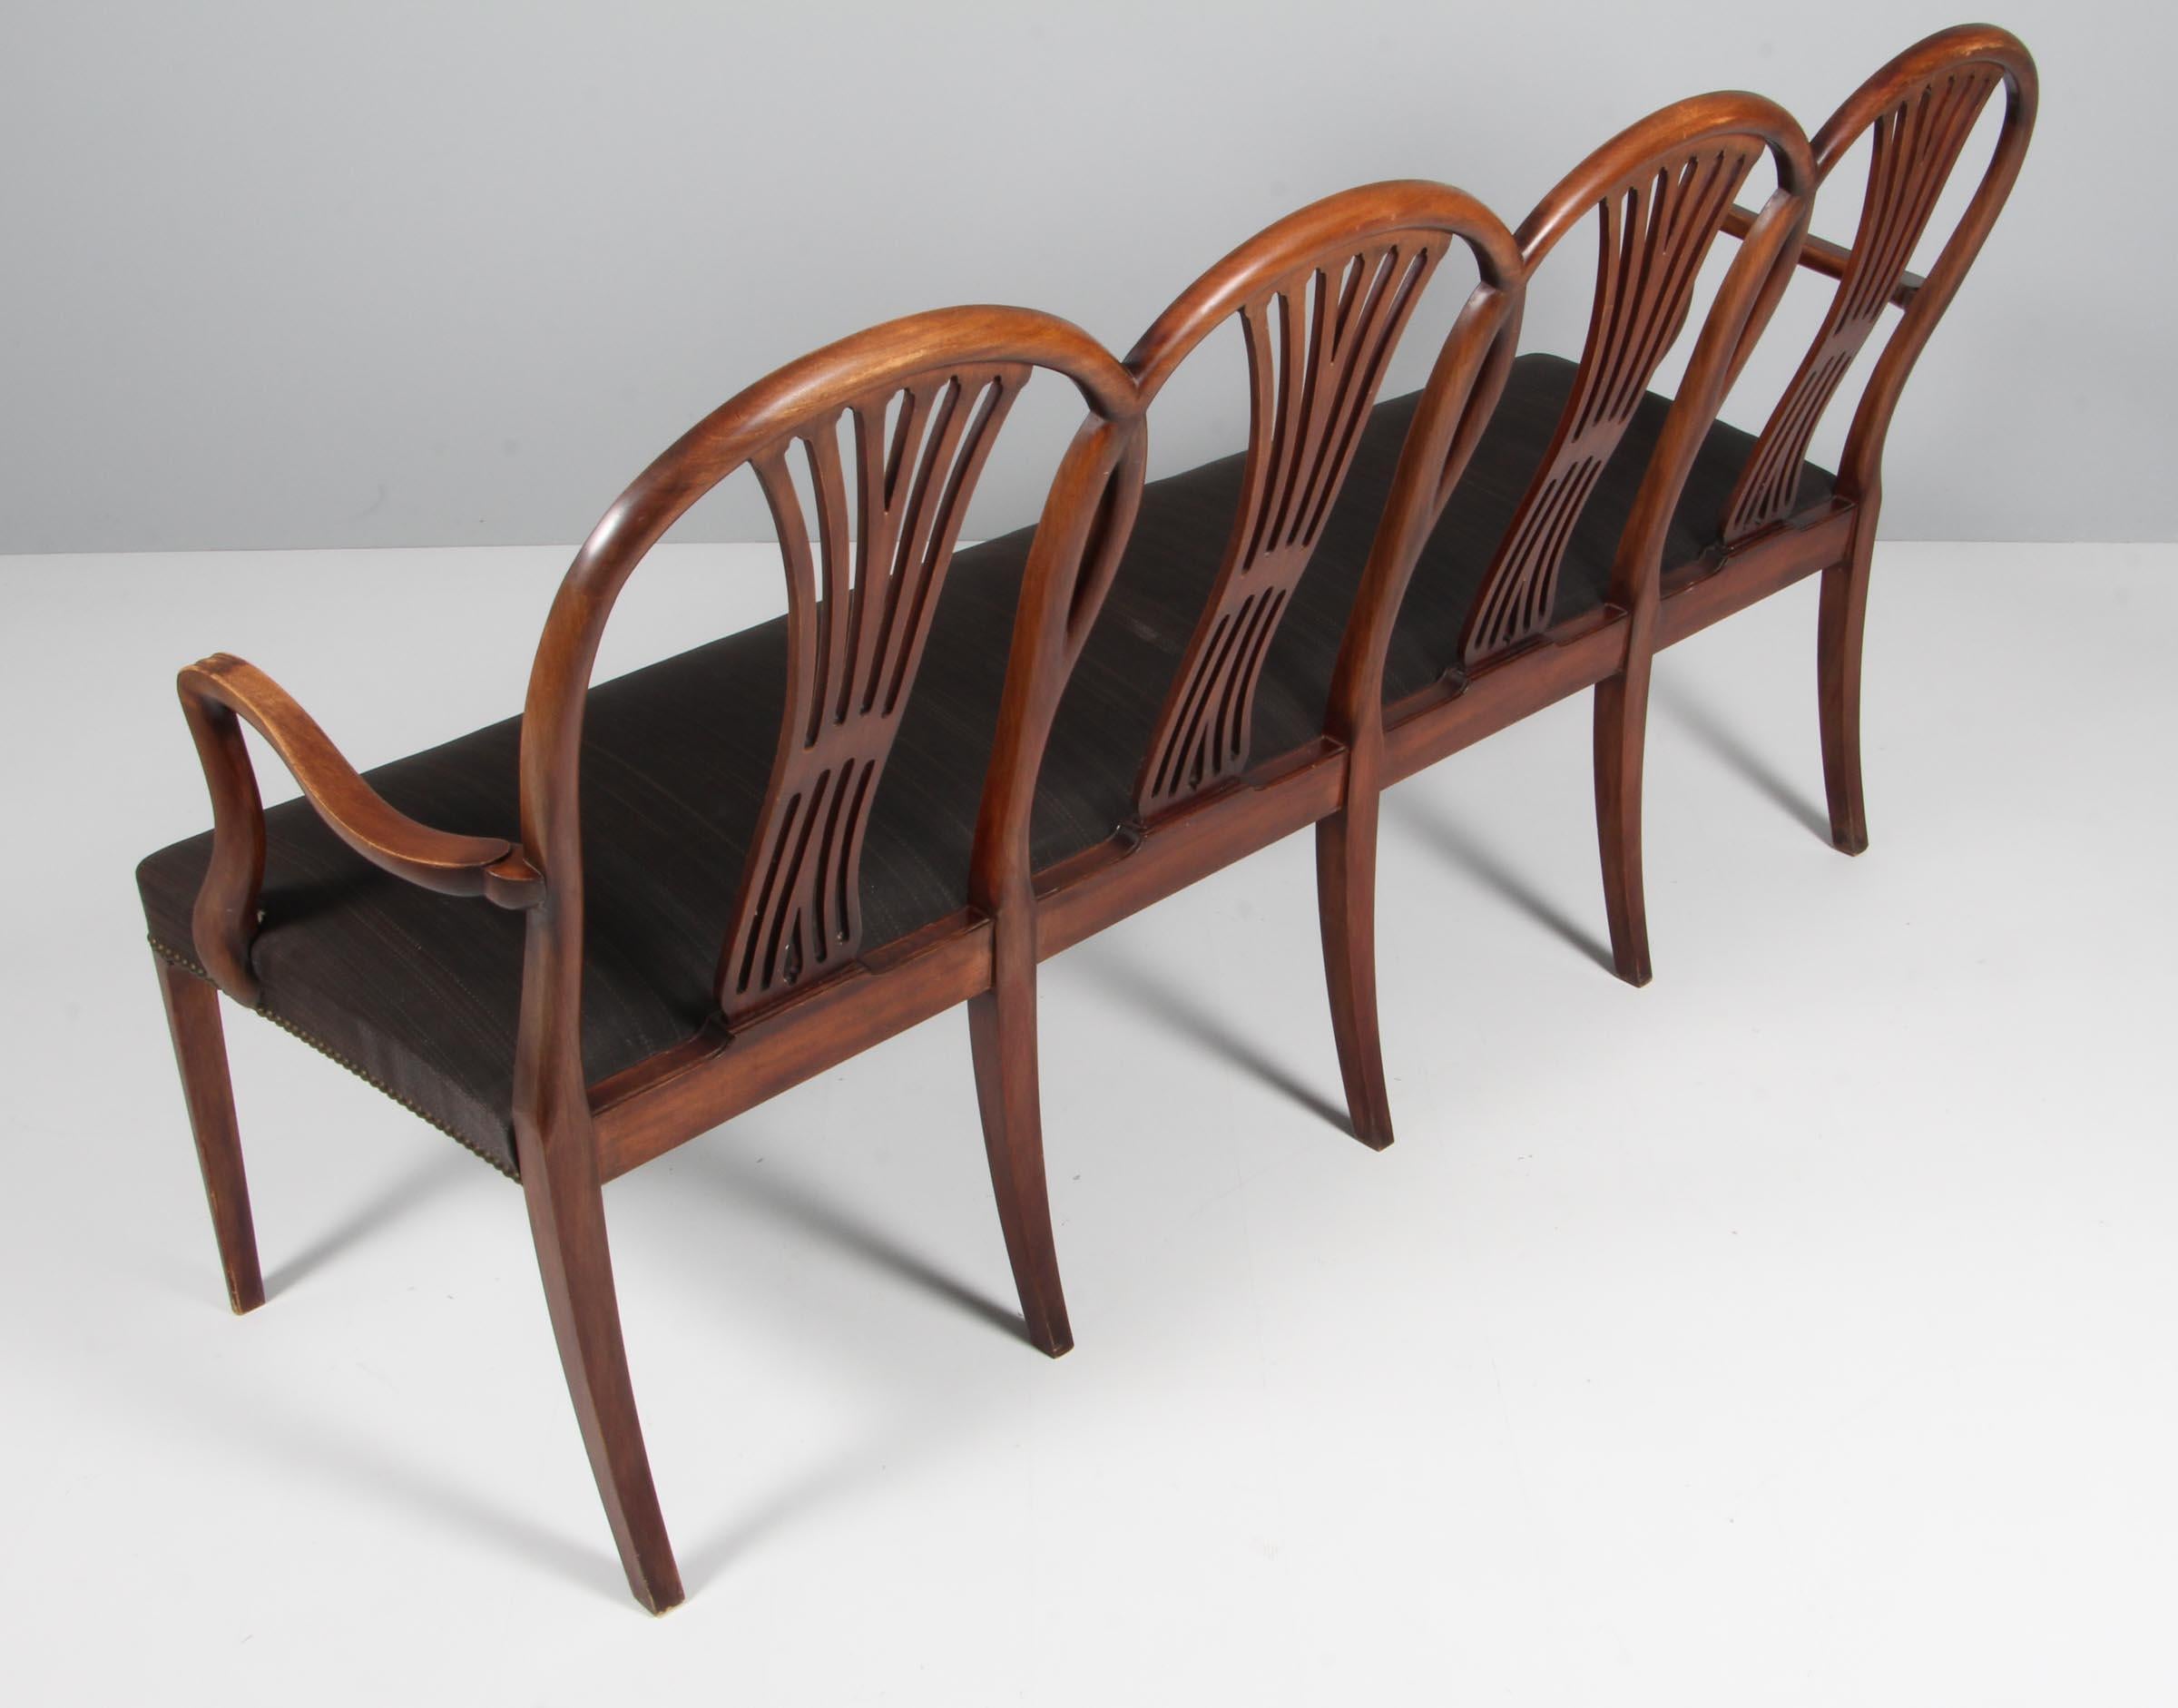 Scandinavian Modern Frits Henningsen, Four Seat Bench For Sale